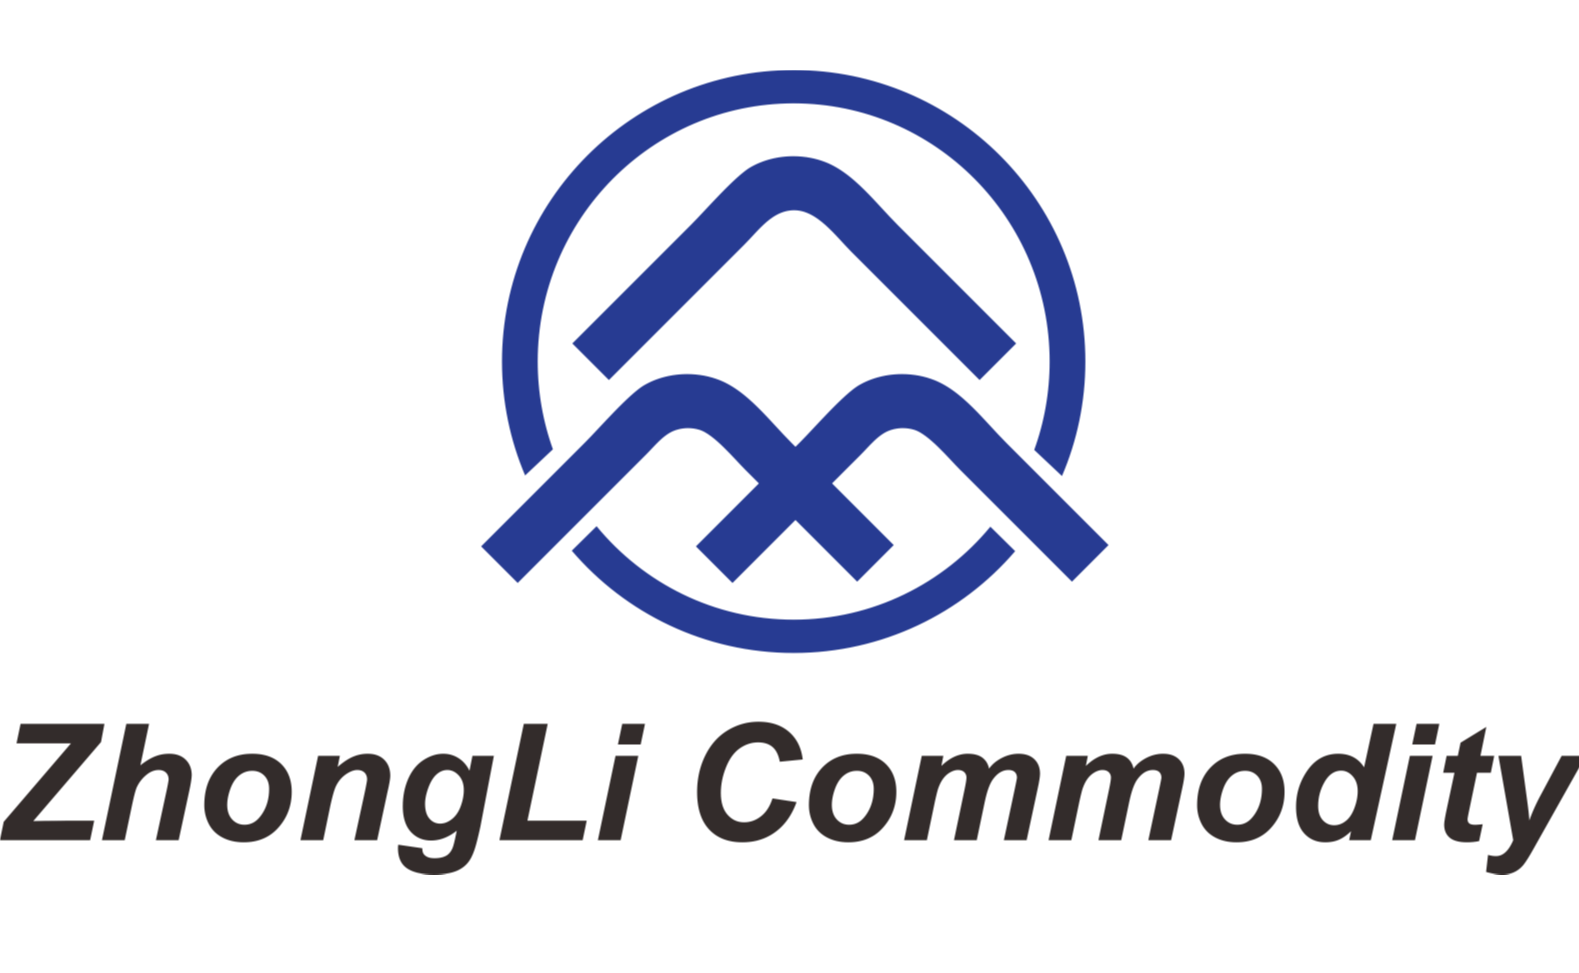 ZhongShan Zhongli Commodity Co.，Ltd